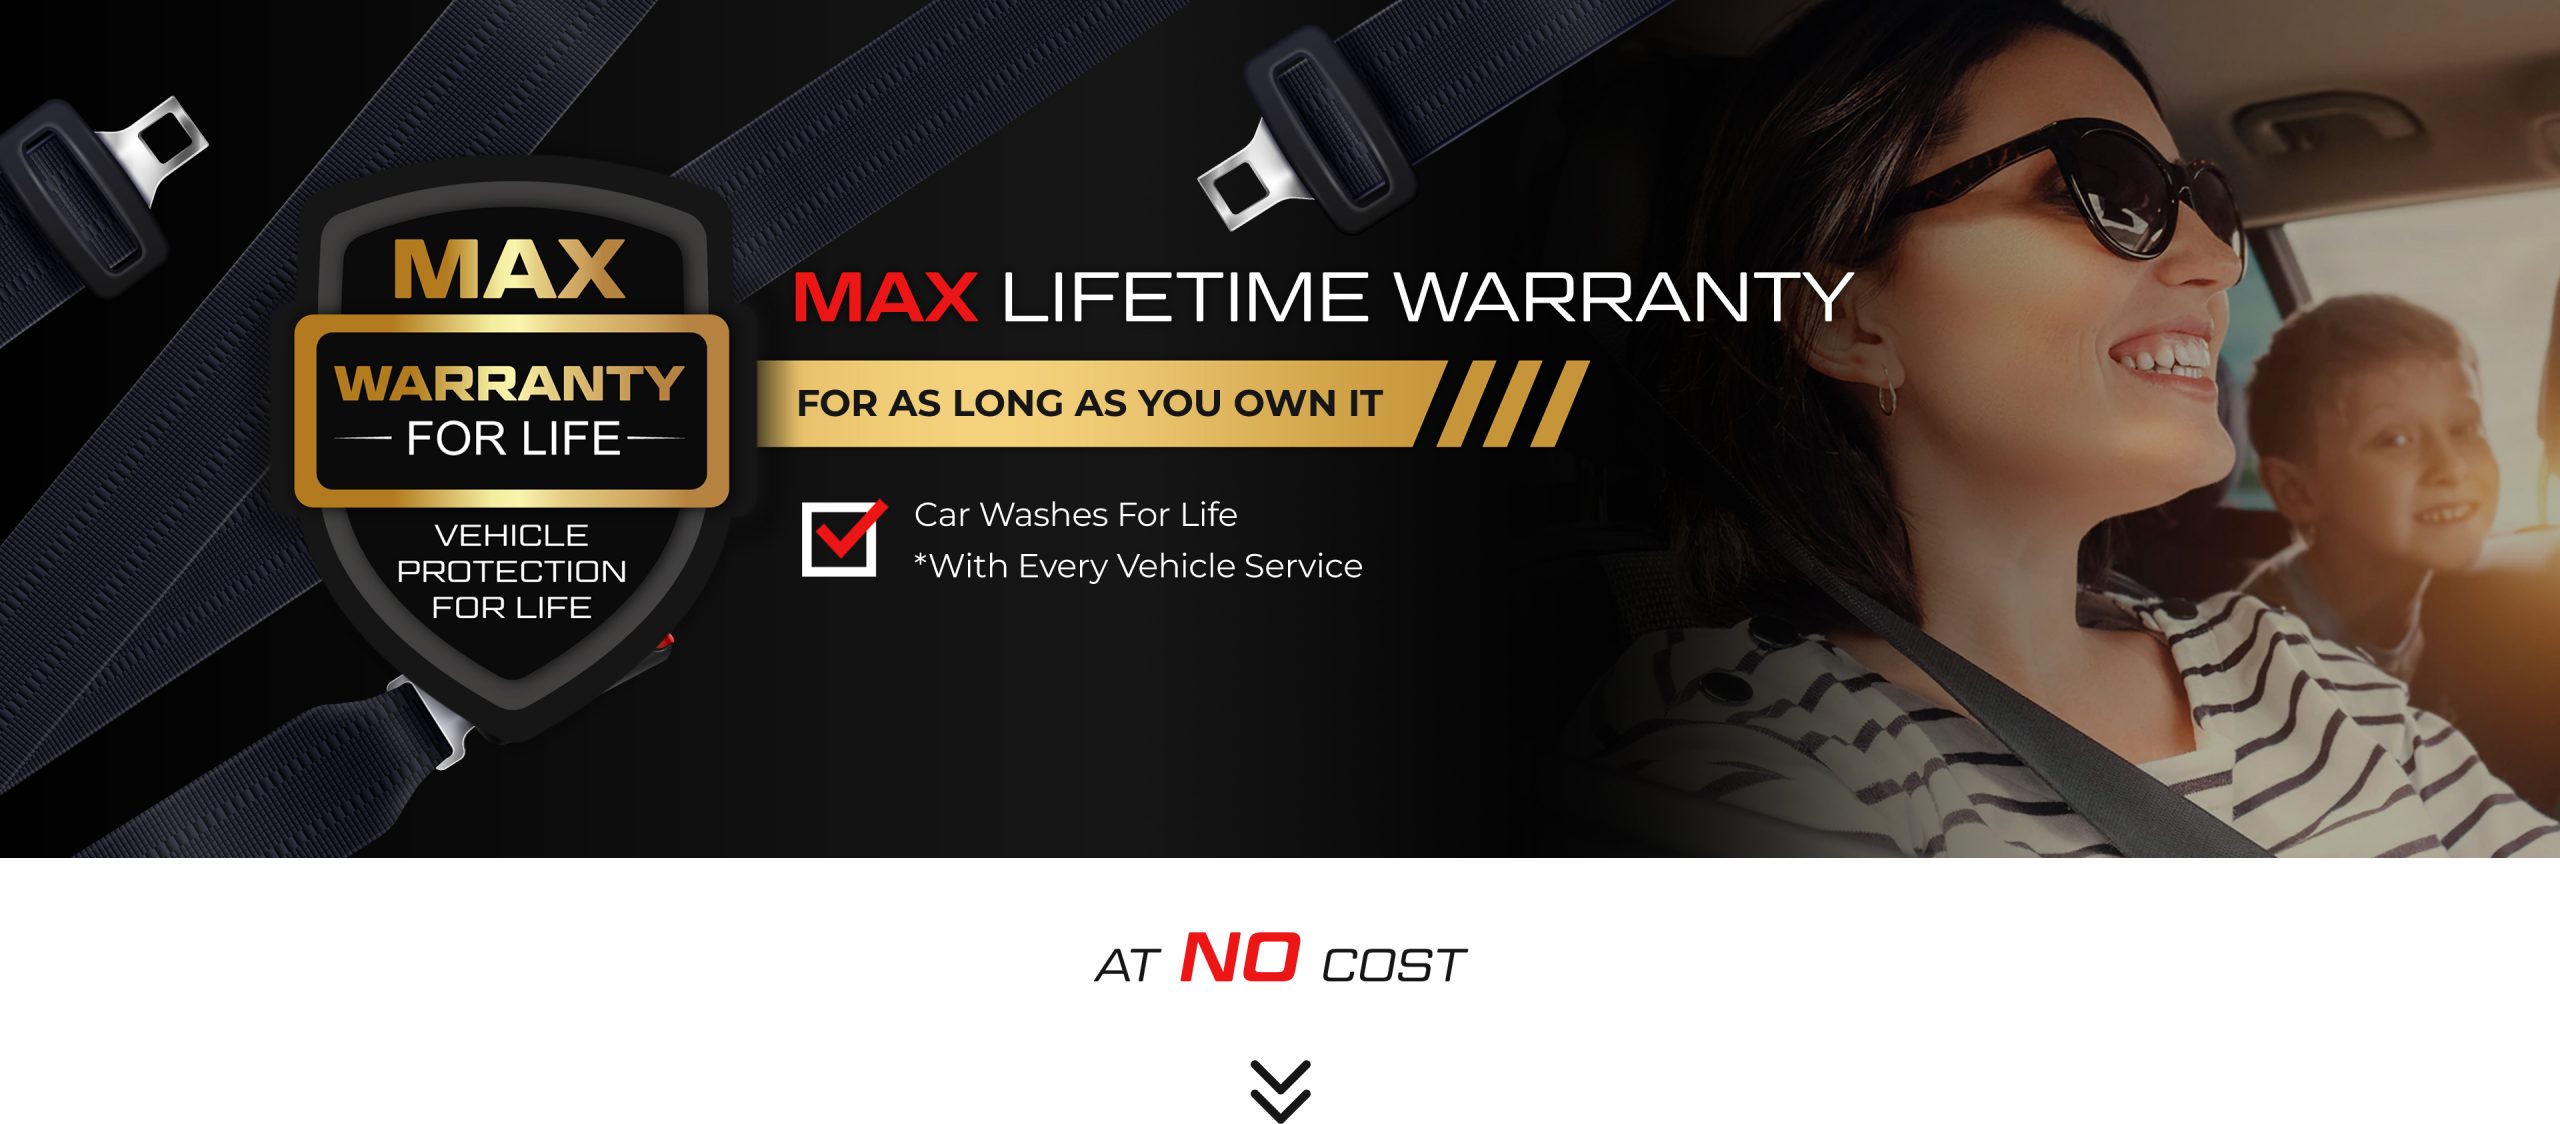 Max Lifetime Warranty